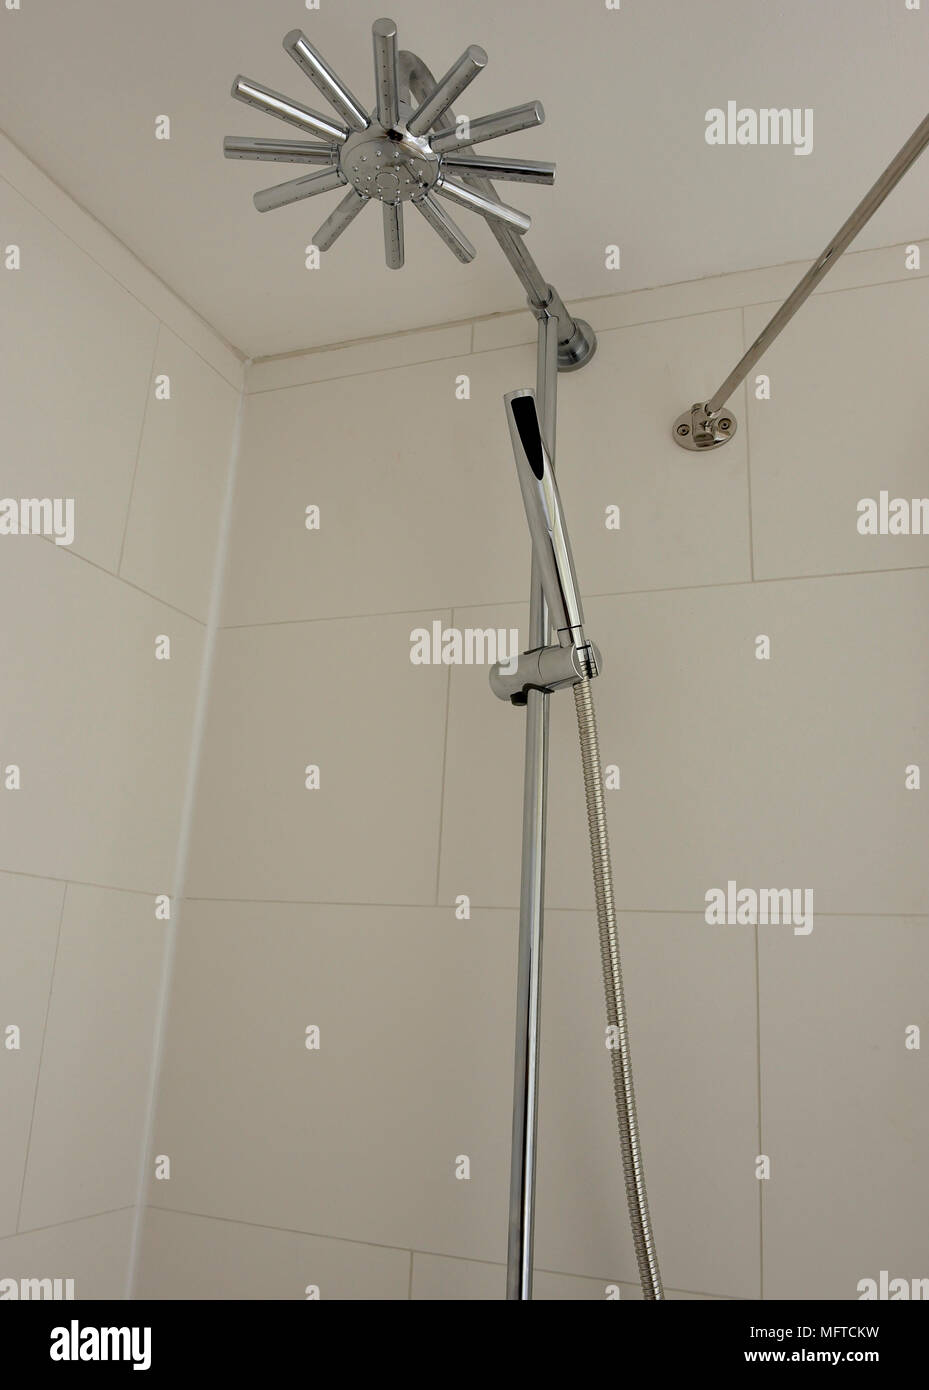 Modern shower tap fitting Stock Photo